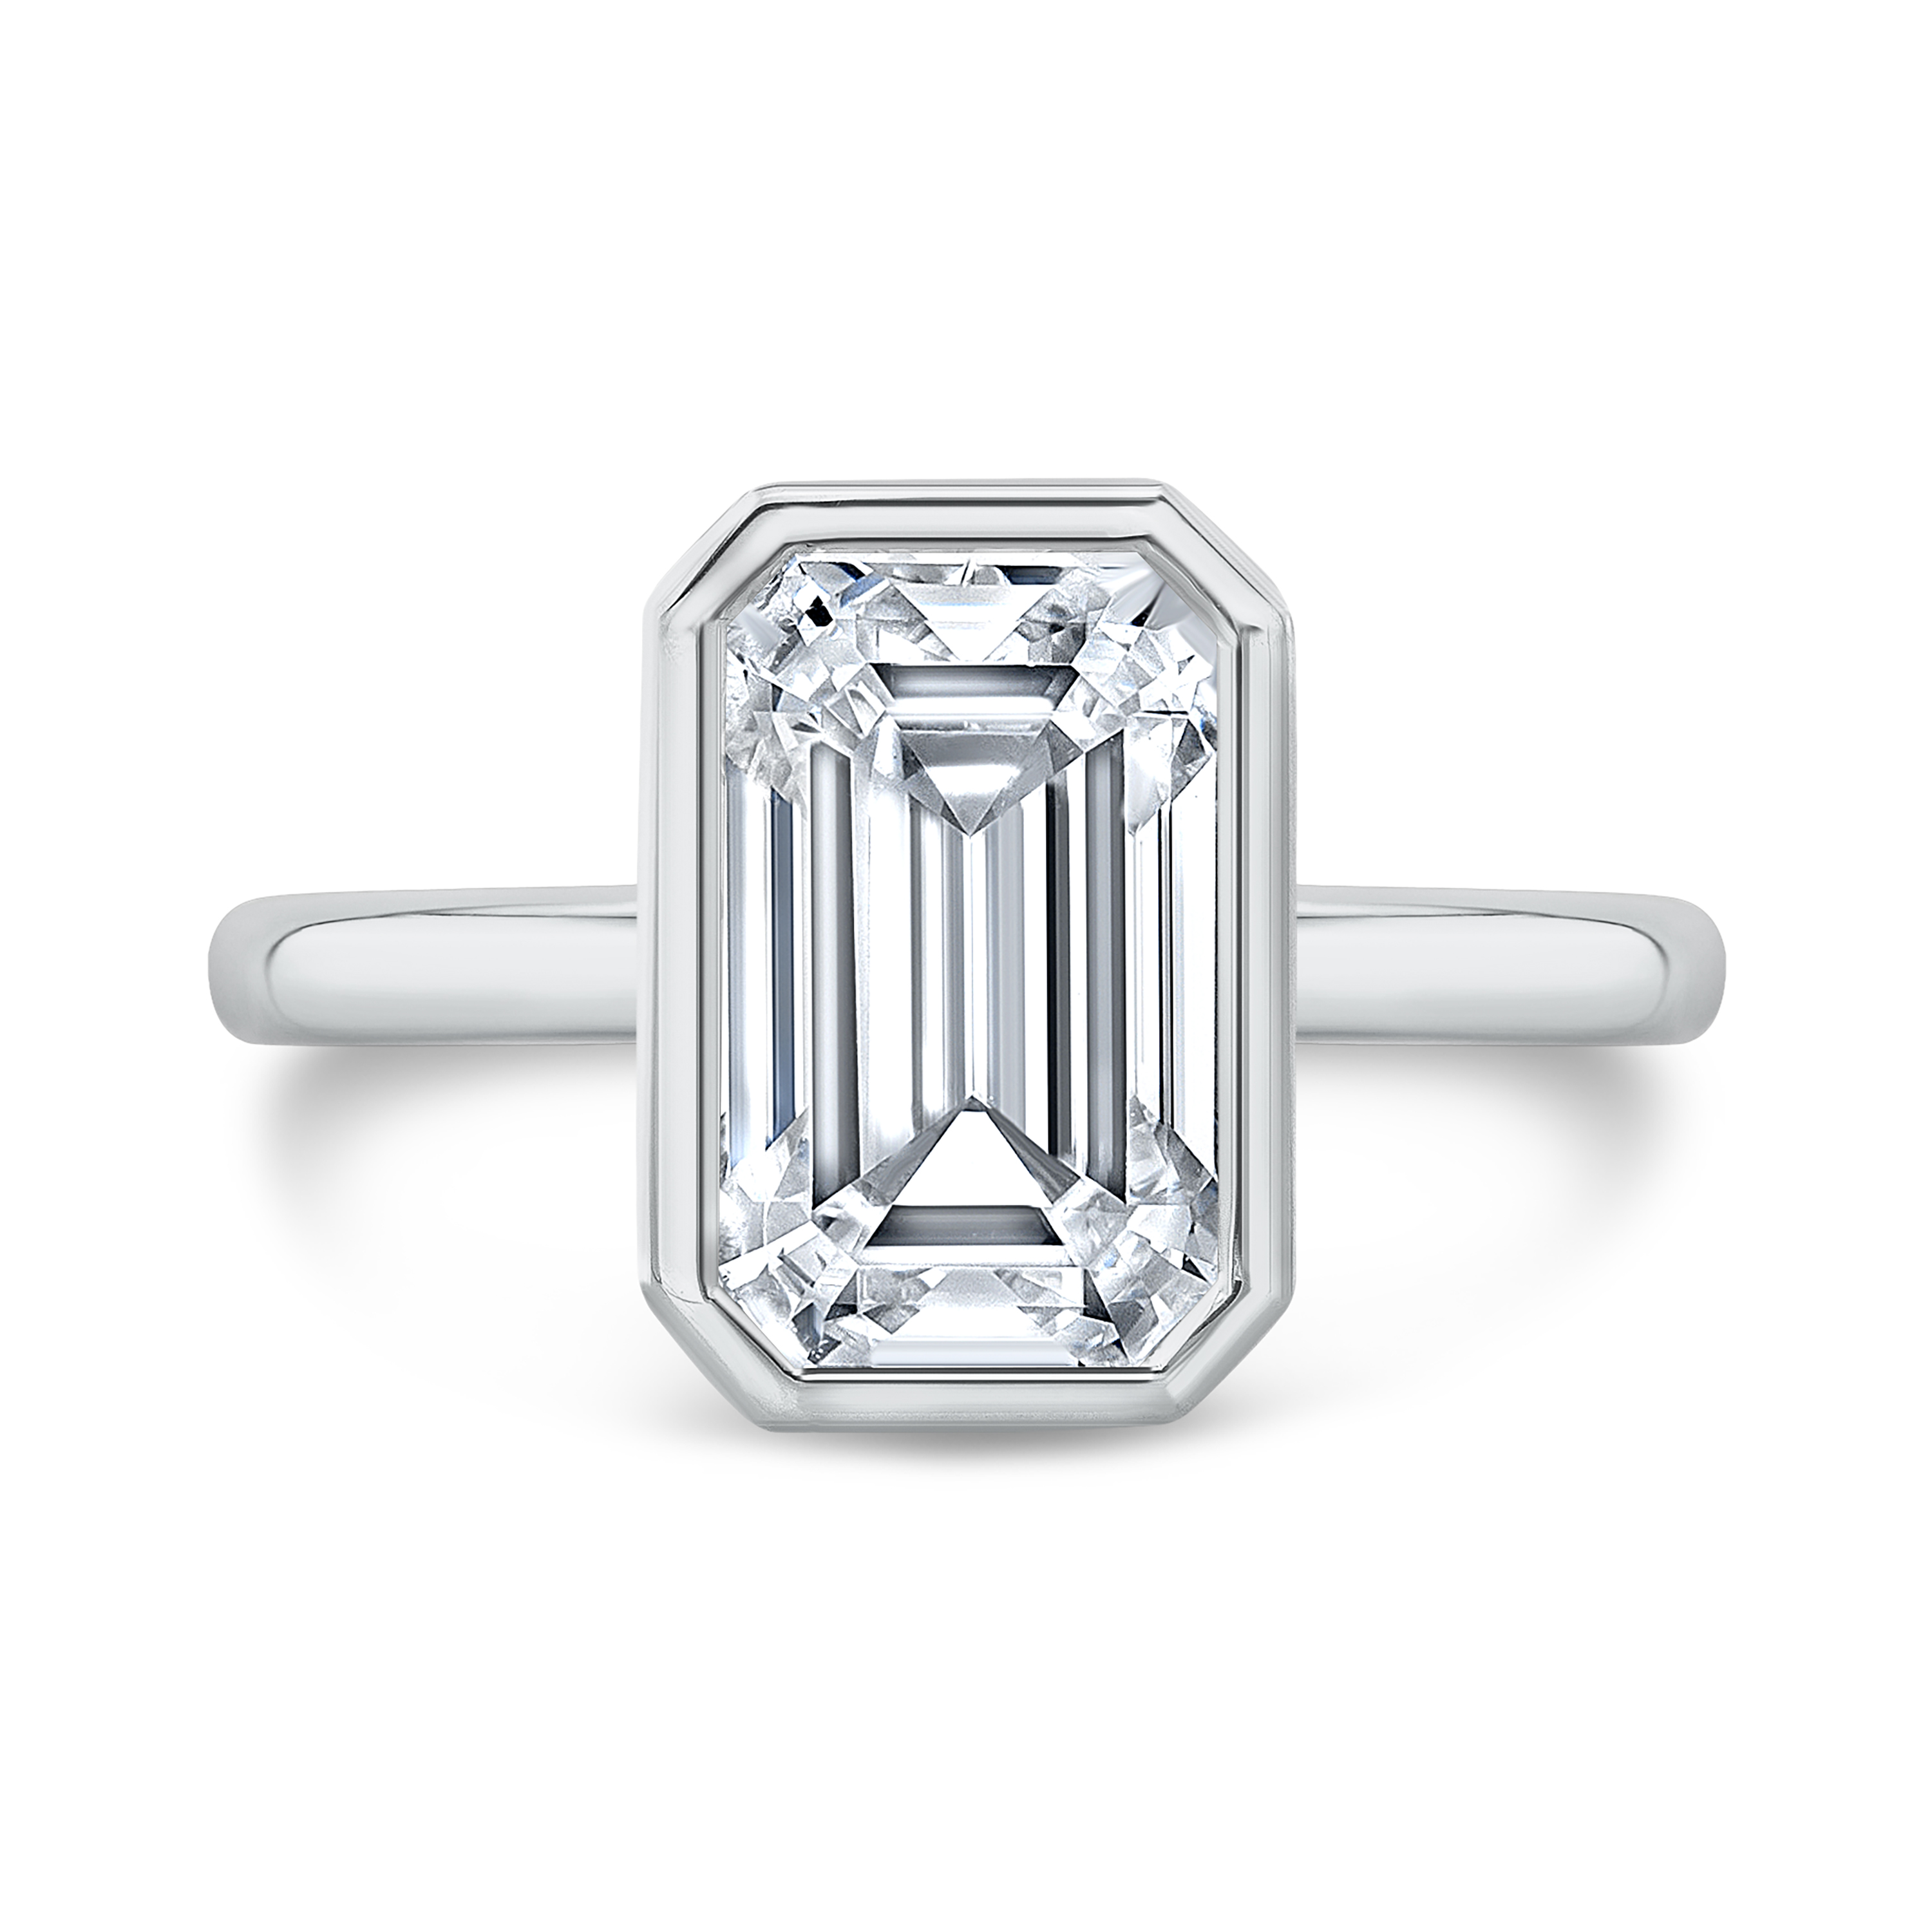 2 Carat Emerald Cut Diamond Engagement Ring